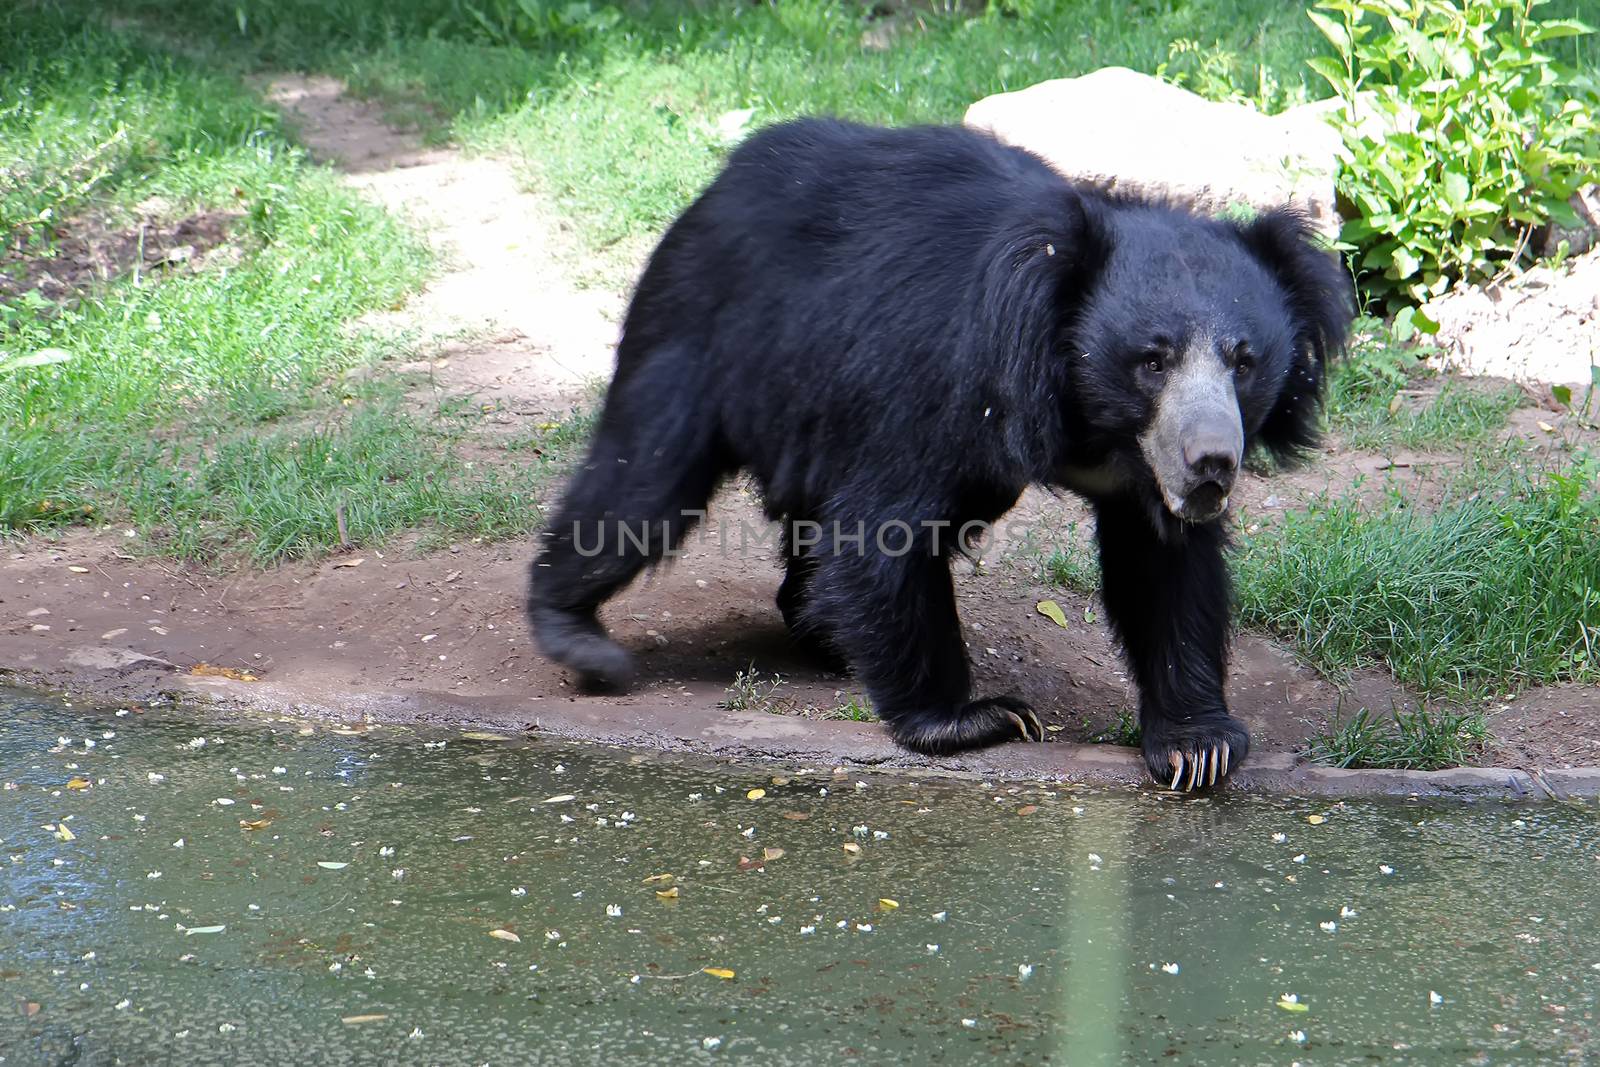 The American black bear Ursus americanus, previously known as Euarctos americanus is a medium-sized bear native to North America